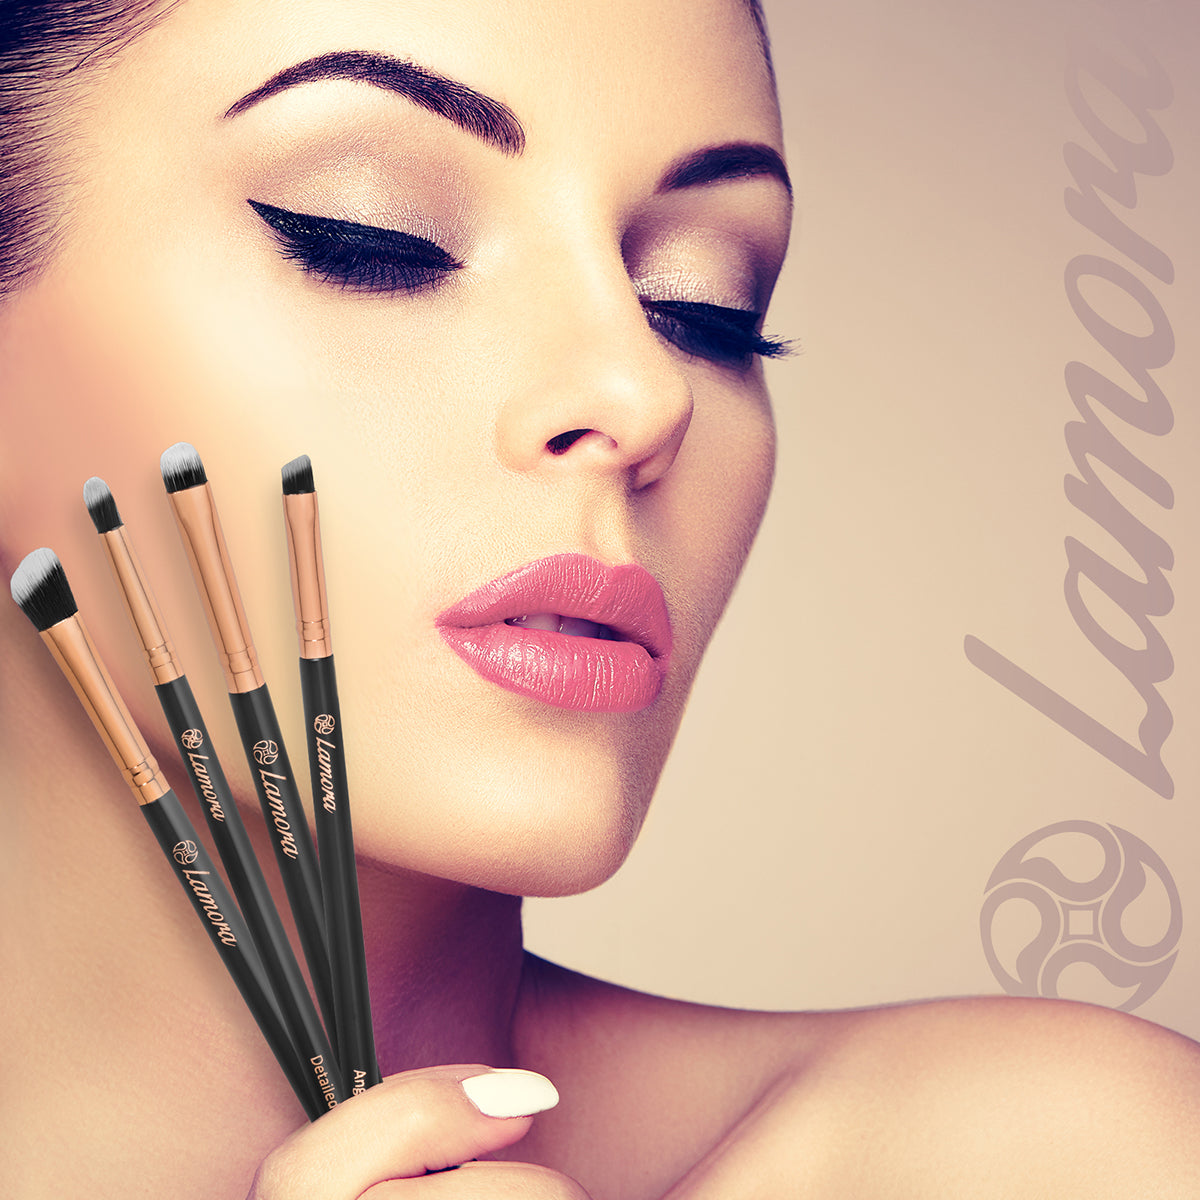 Beautiful woman holding brushes used to apply eyeshadow